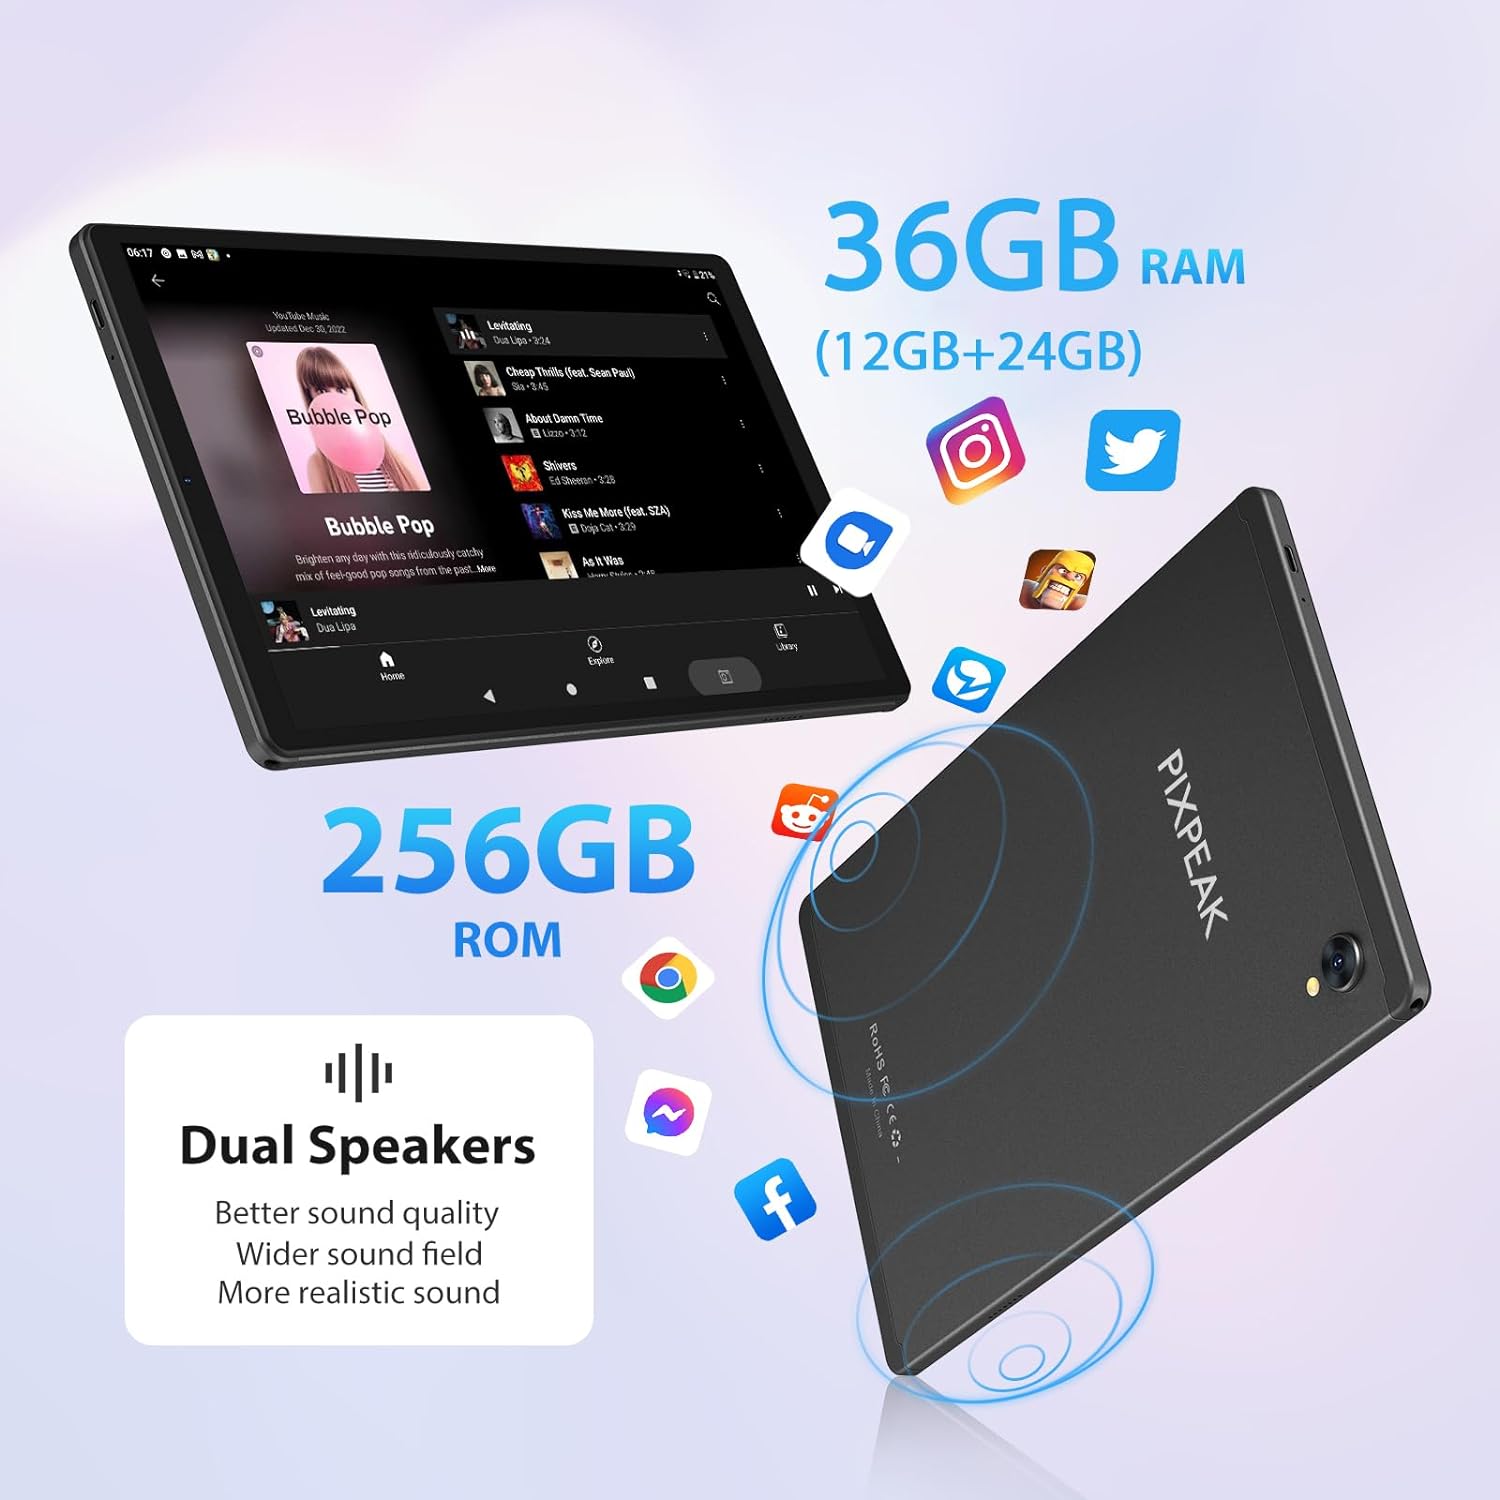 PIXPEAK 2K Tablet 10.36 Pulgadas, 4G LTE+5G WiFi, 36GB RAM+256GB ROM (2TB TF), Android 13 Tablet PC, Octa-Core, INCELL 2000 * 1200, 8000mAh, 13MP+8MP, GPS, Tablet con Teclado ect